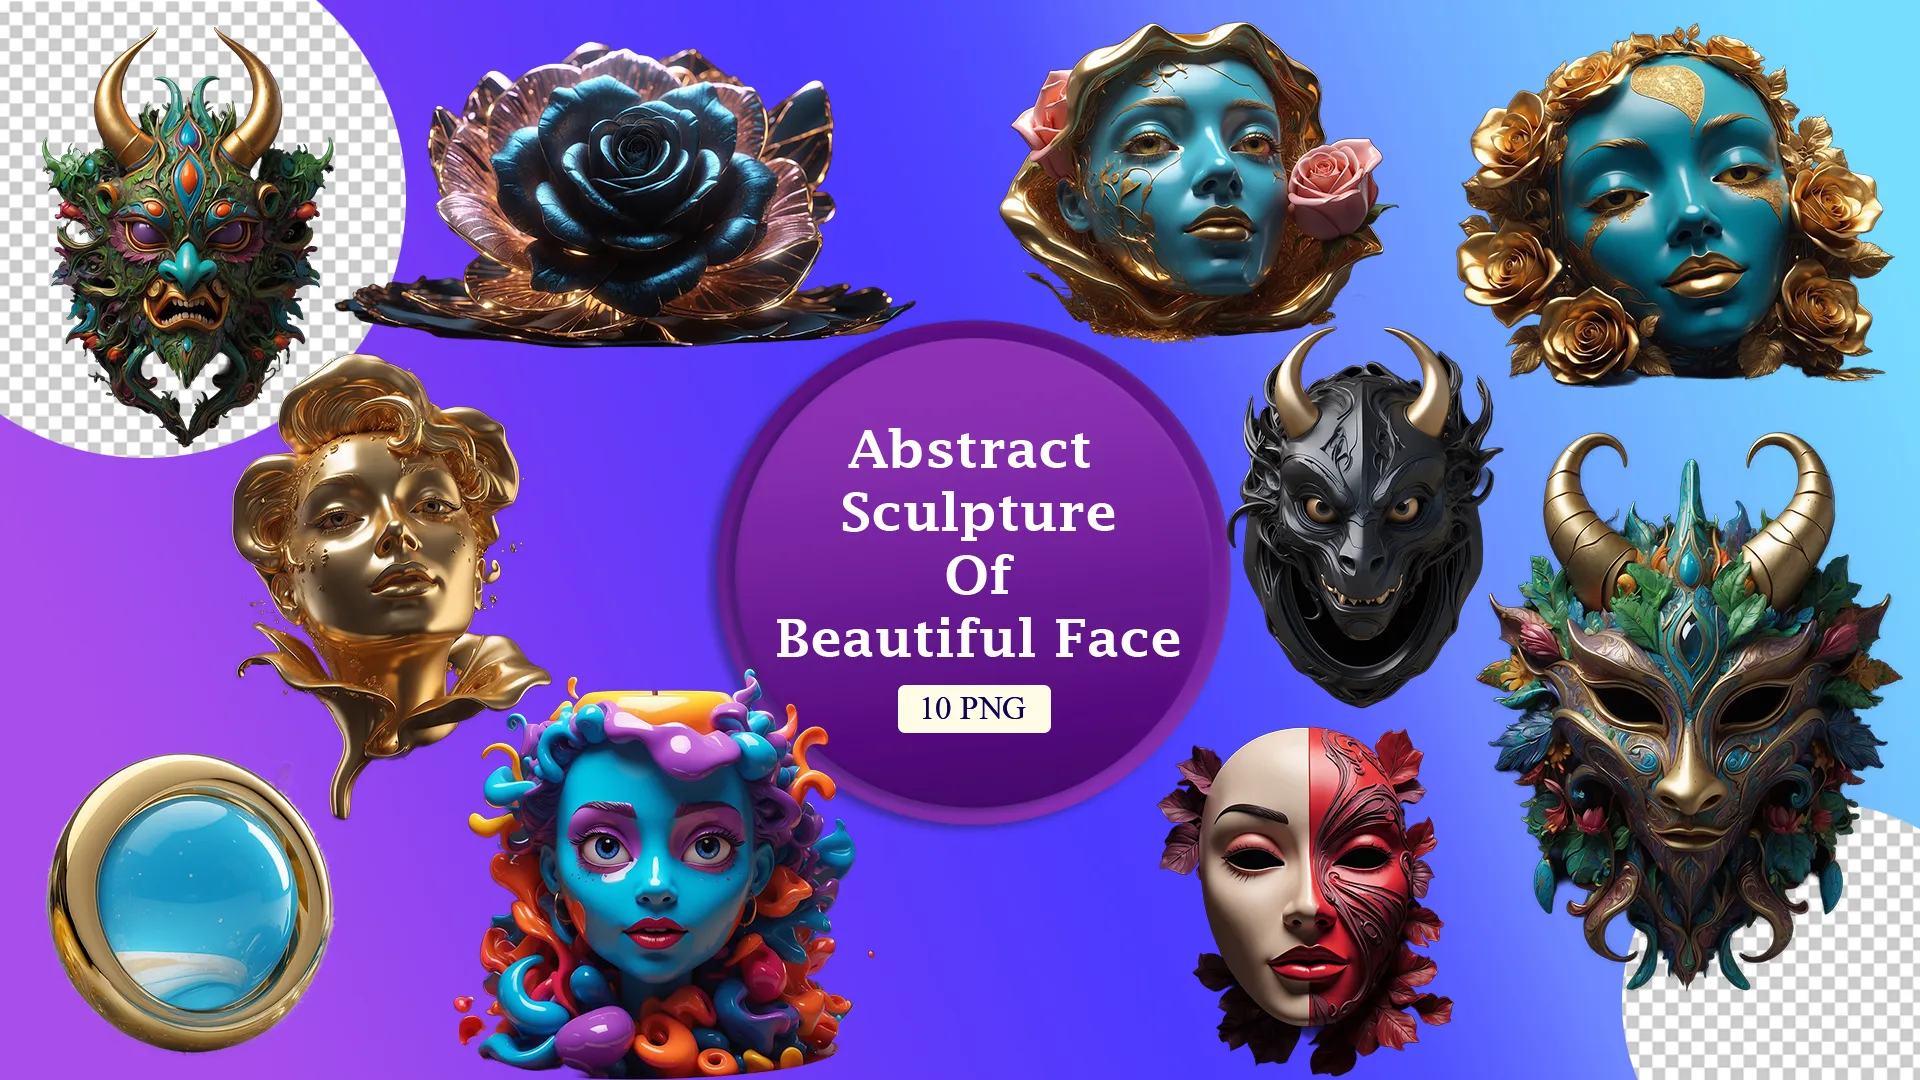 Sculptural Faces and Floral 3D Art Pack image